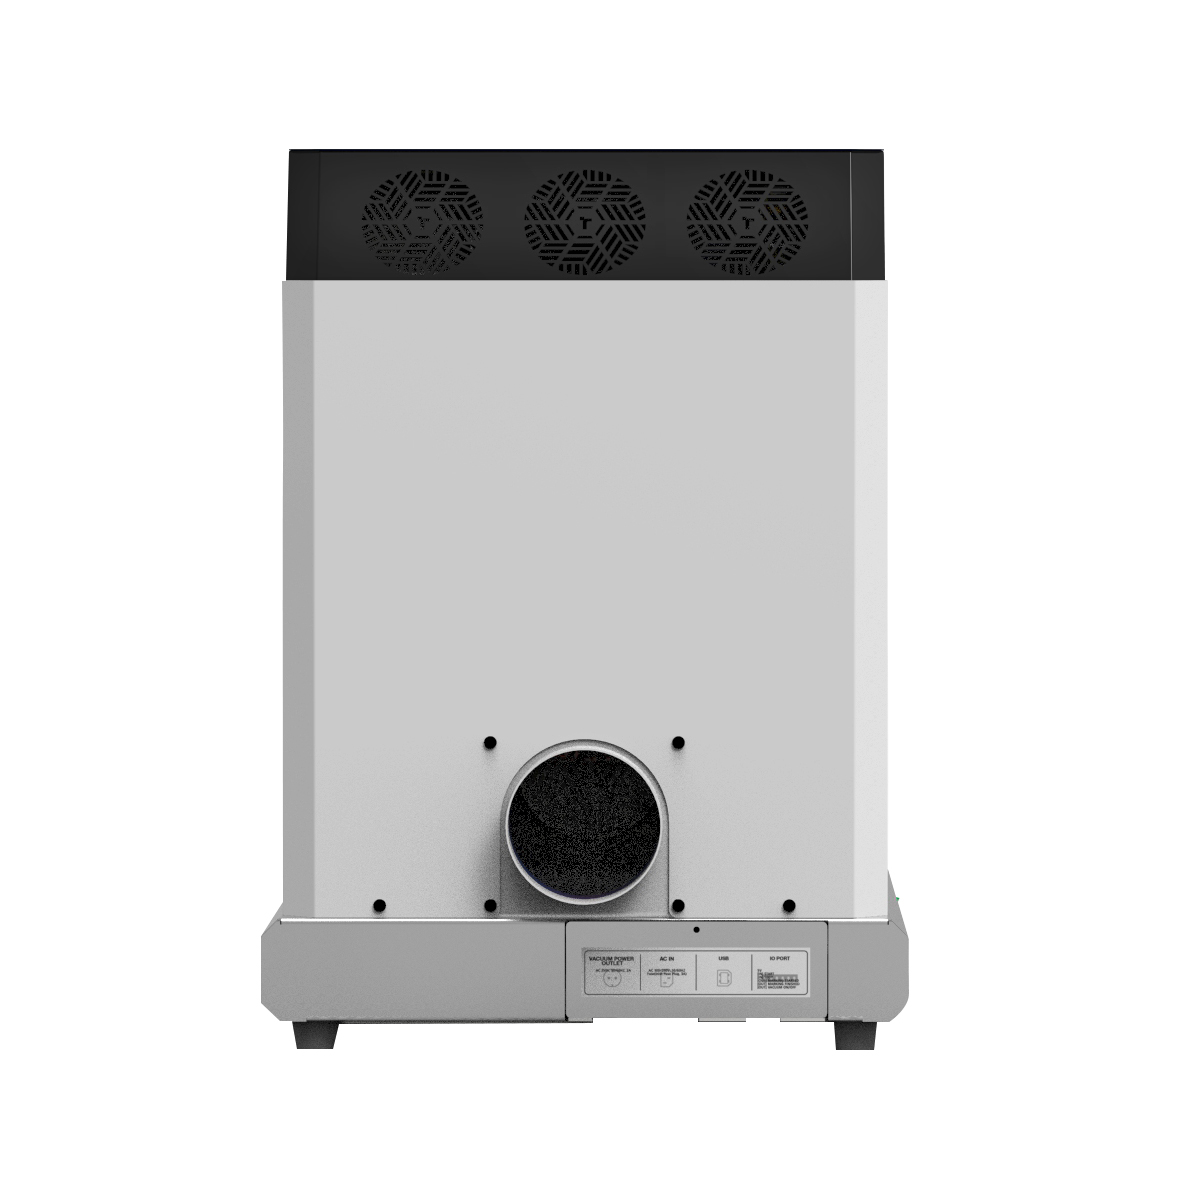 Lasermarkering machine Magic-L3 20W met geïntegreerde camera en autofocus